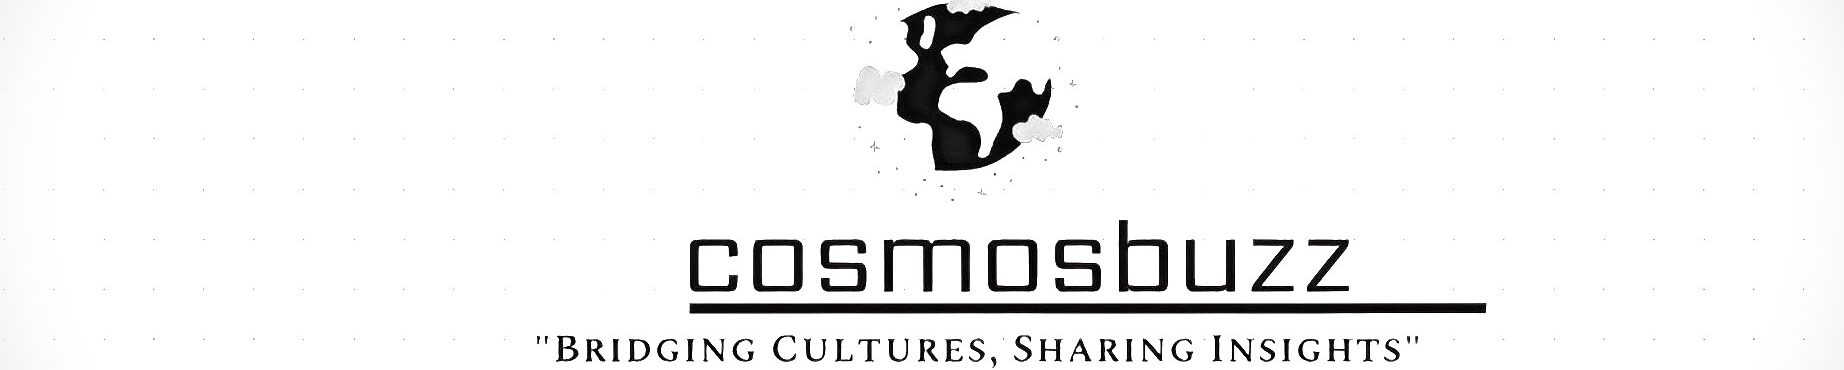 cosmosbuzz.com